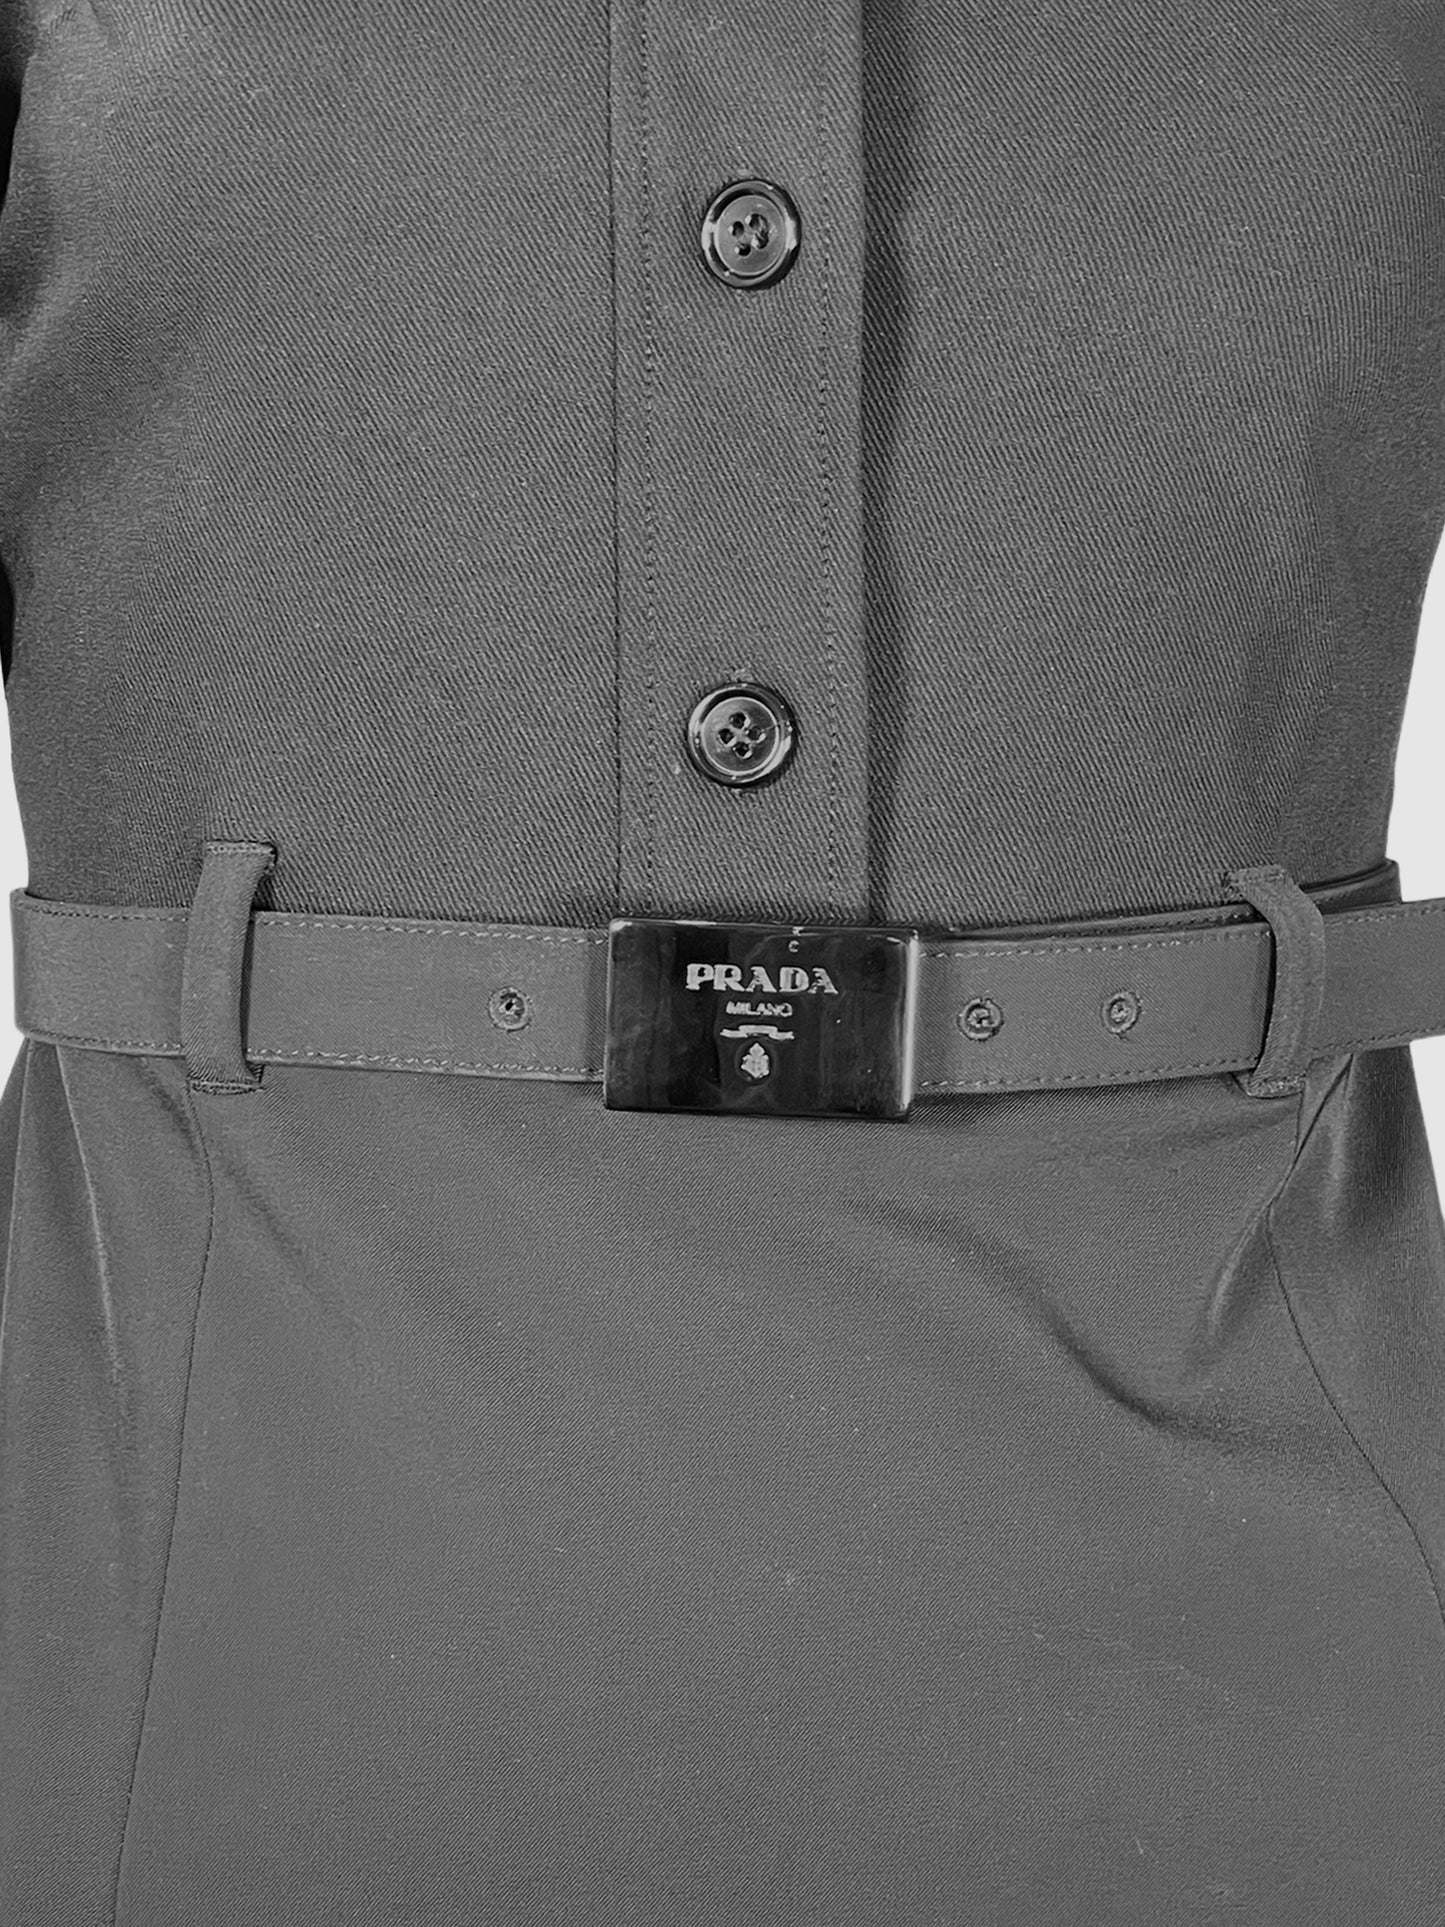 Prada Button-Up Dress with Belt - Size 40